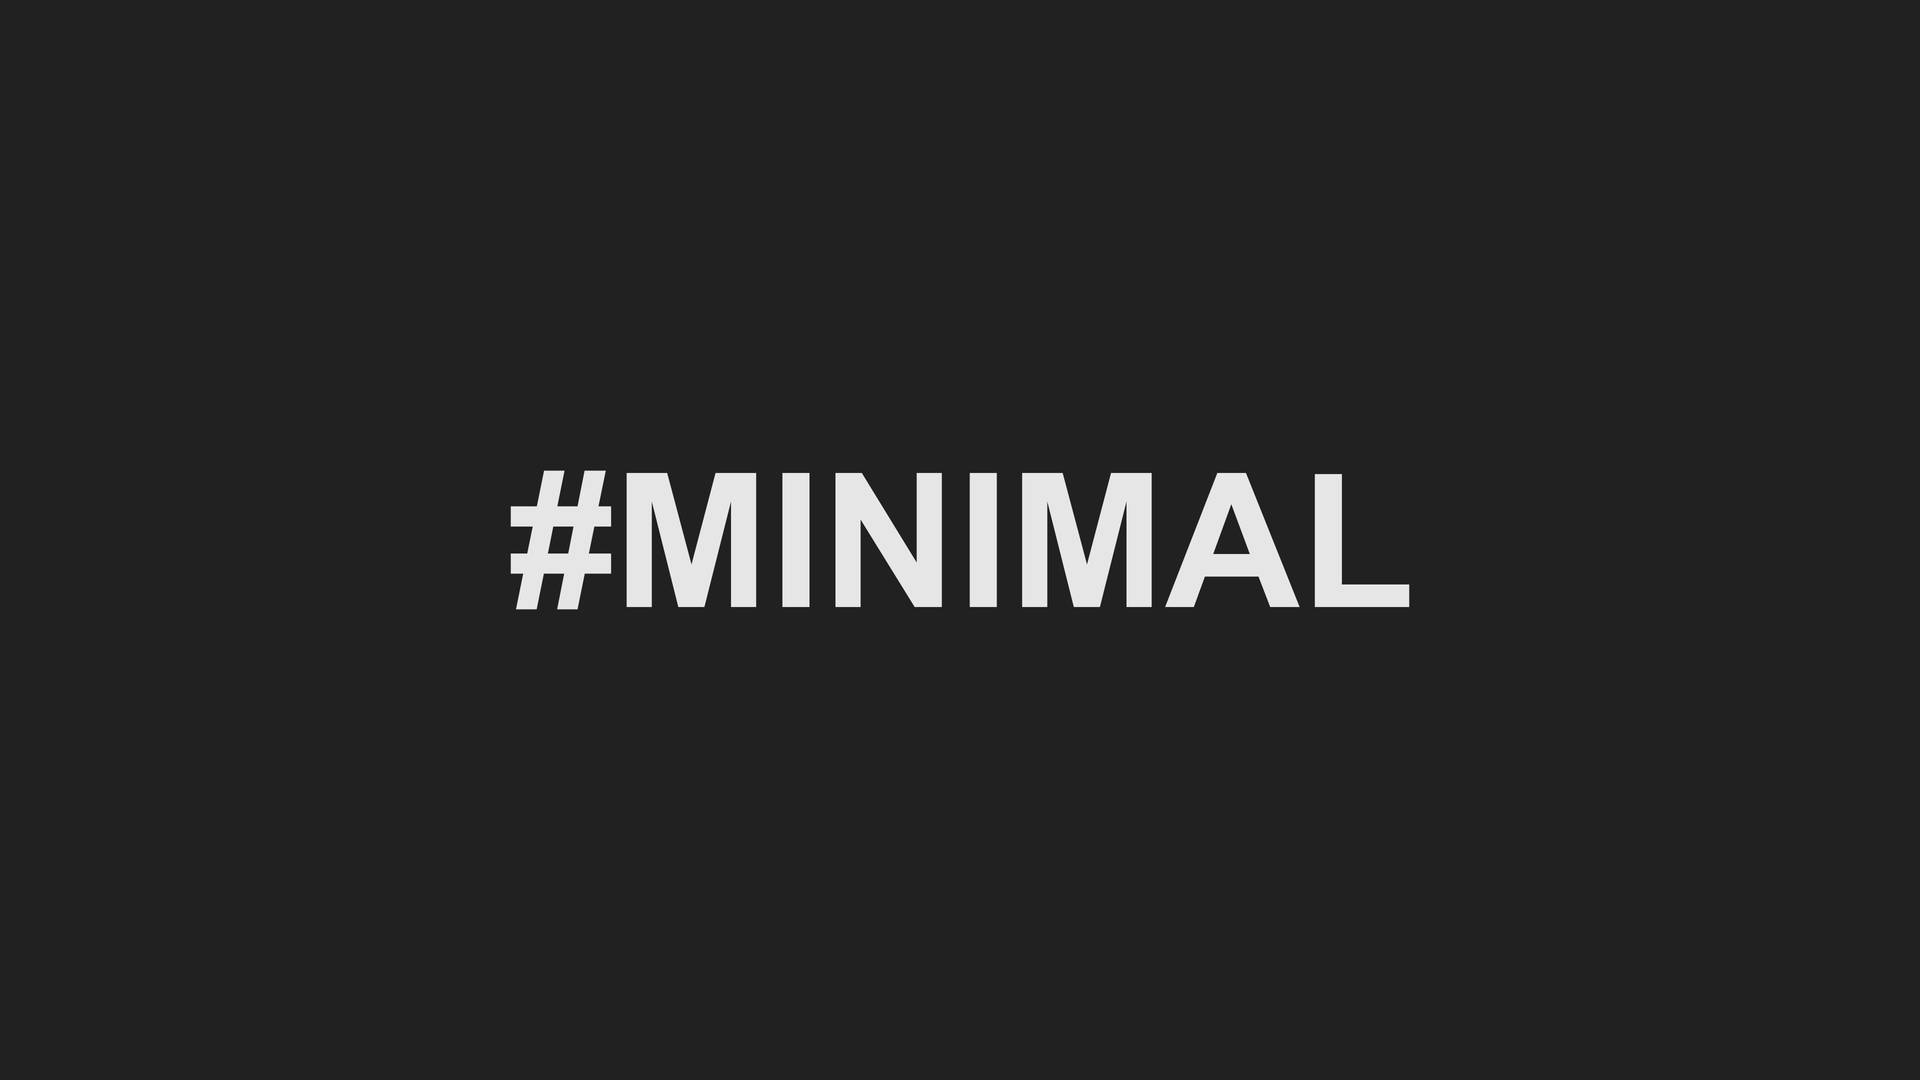 Hashtag Minimal Typography Background